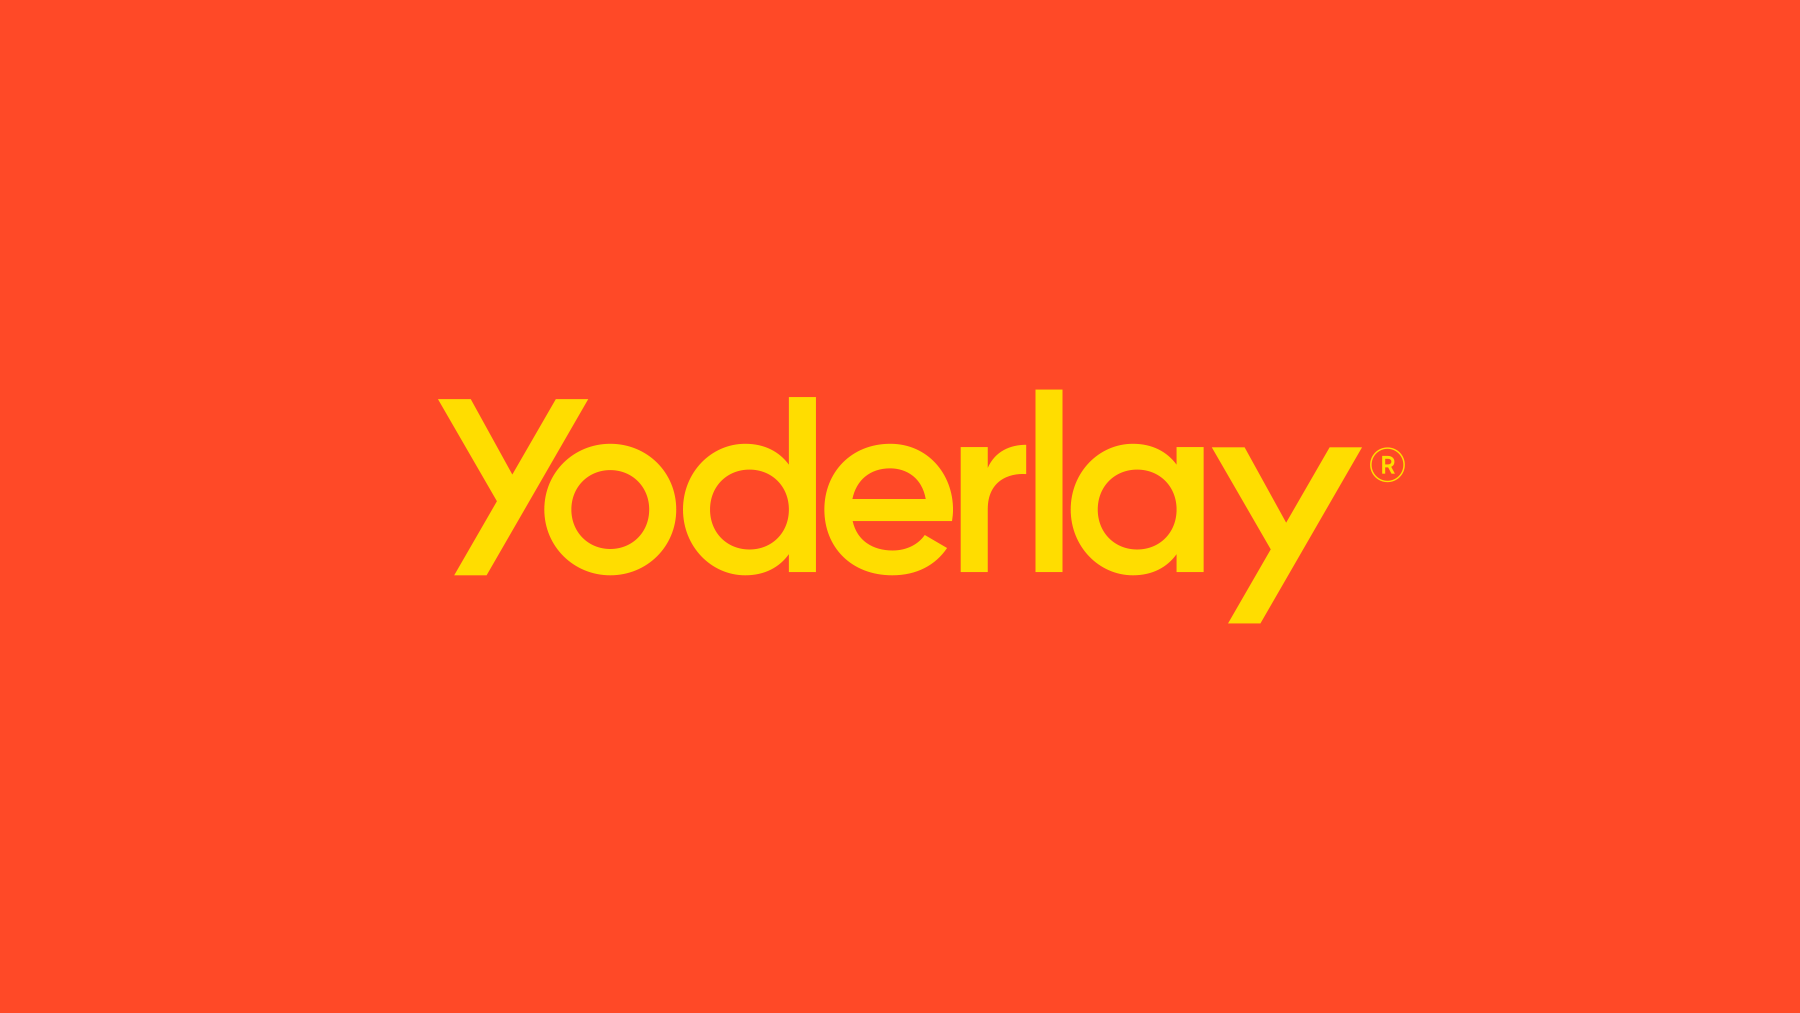 Yoderlay brand design typography in yellow.